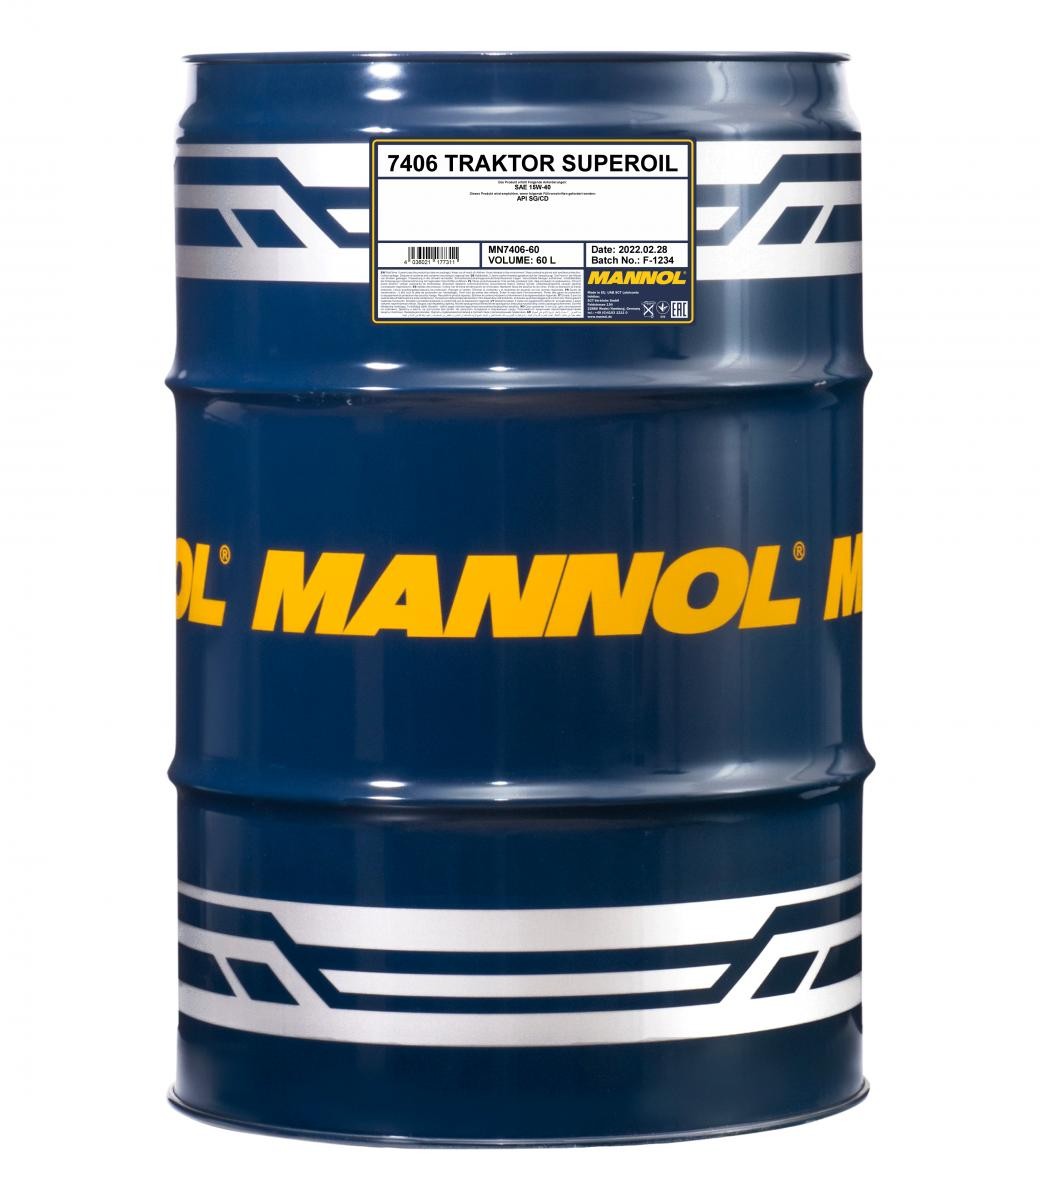 MANNOL Traktor, Superoil 15W-40, 60l, Mineral Oil Motor oil MN7406-60 buy